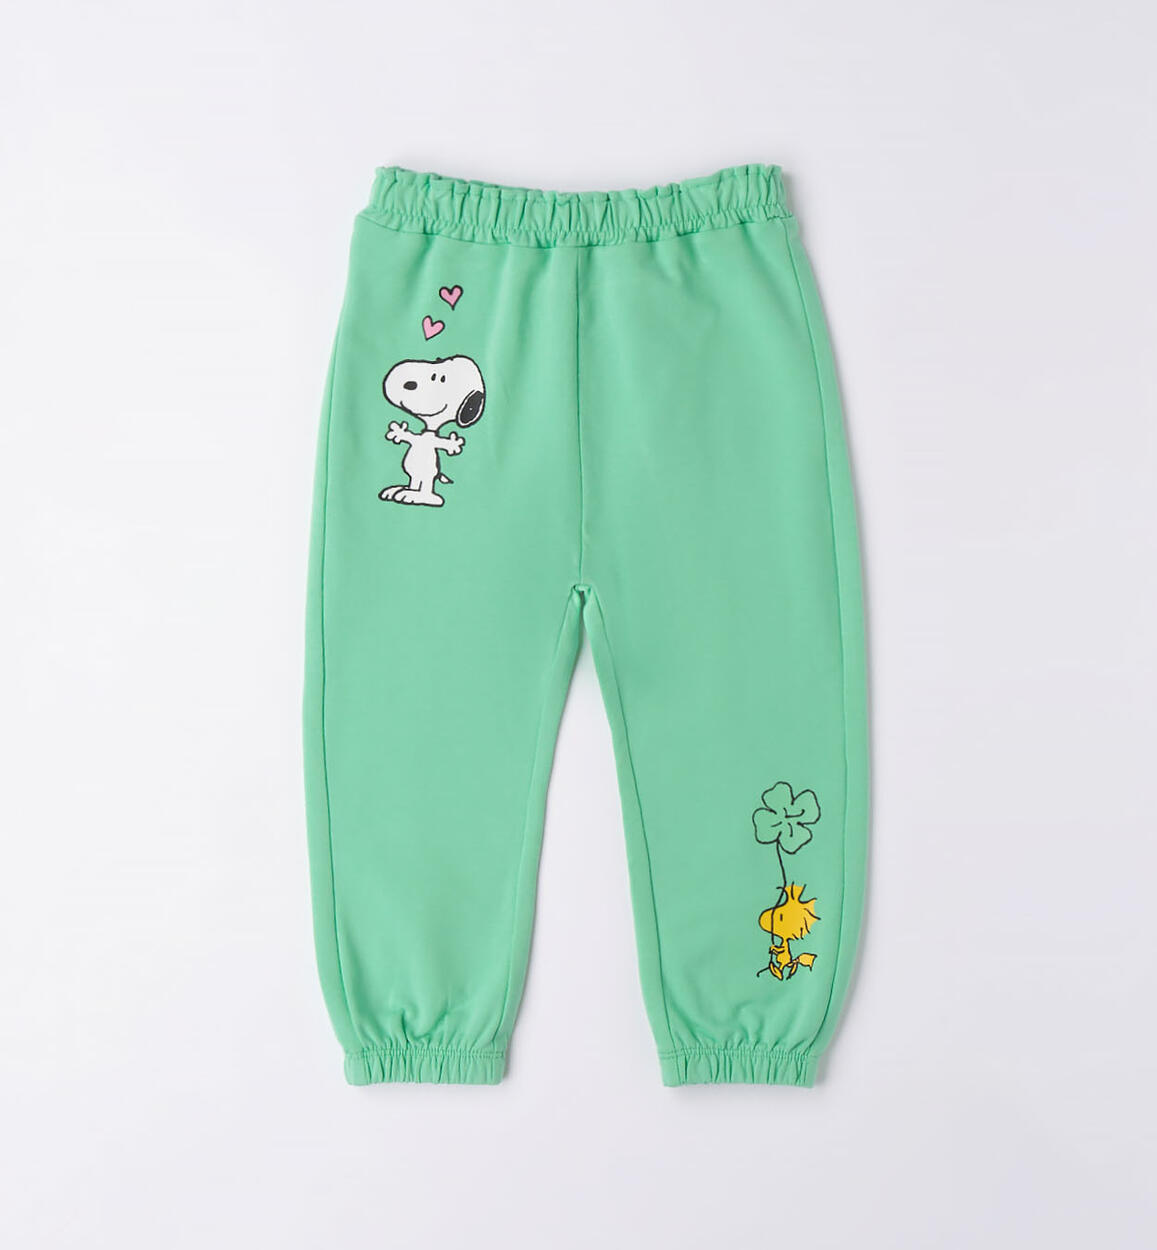 Pantalone lungo bambina Snoopy ROSSO Sarabanda